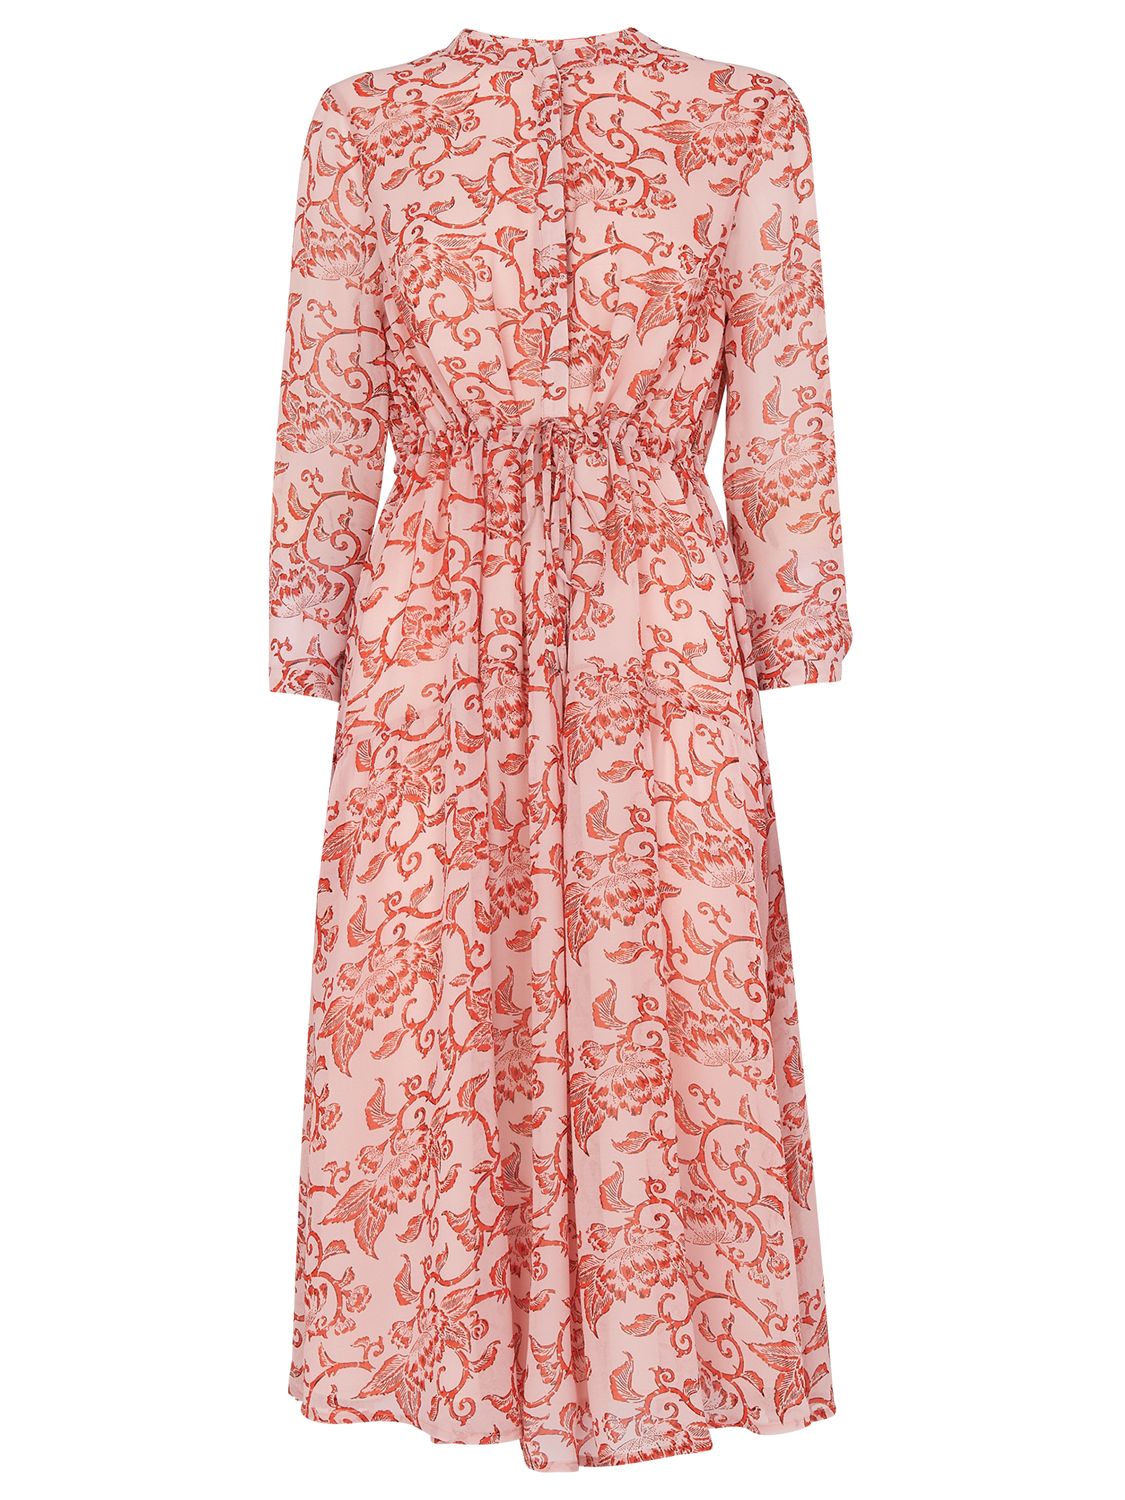 Whistles Bali Print Midi Shirt Dress, Pink/Multi at John Lewis & Partners